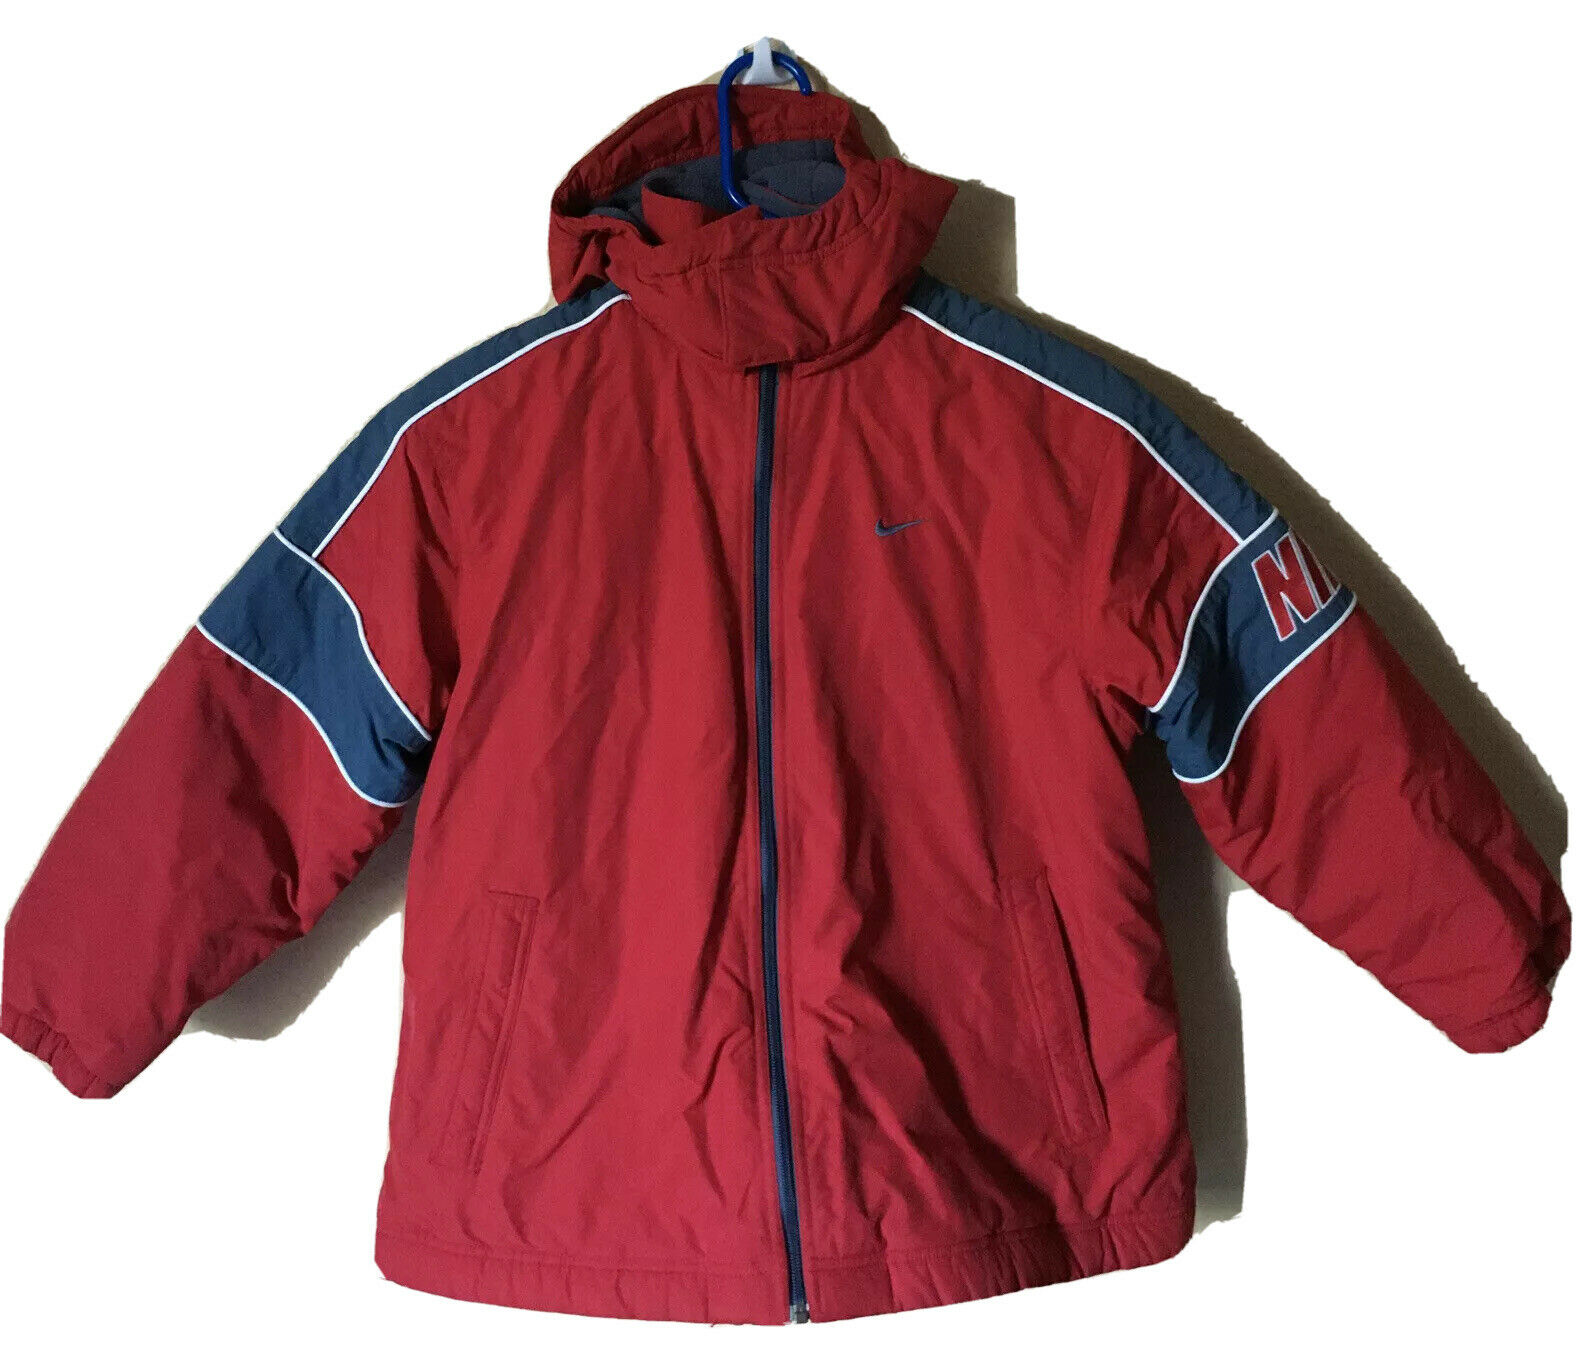 Nike Kid's Boys Insulated Hood Jacket Fleece Lined Red Gray Full Zip Size S/8/10